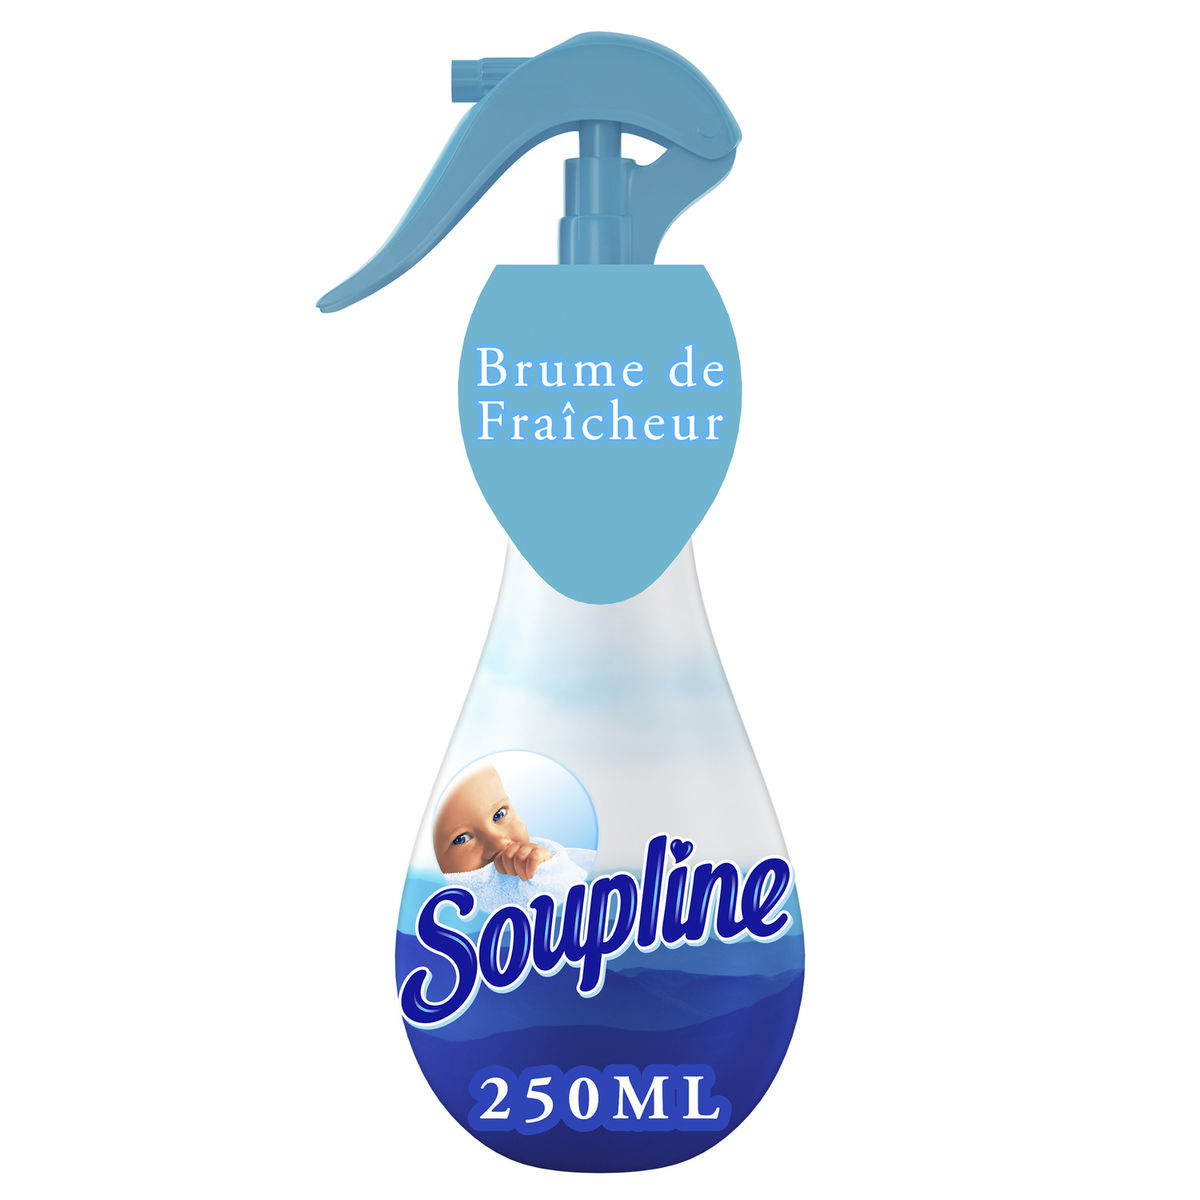 Spray Soupline Brume 3D Grand Air - 250 ml